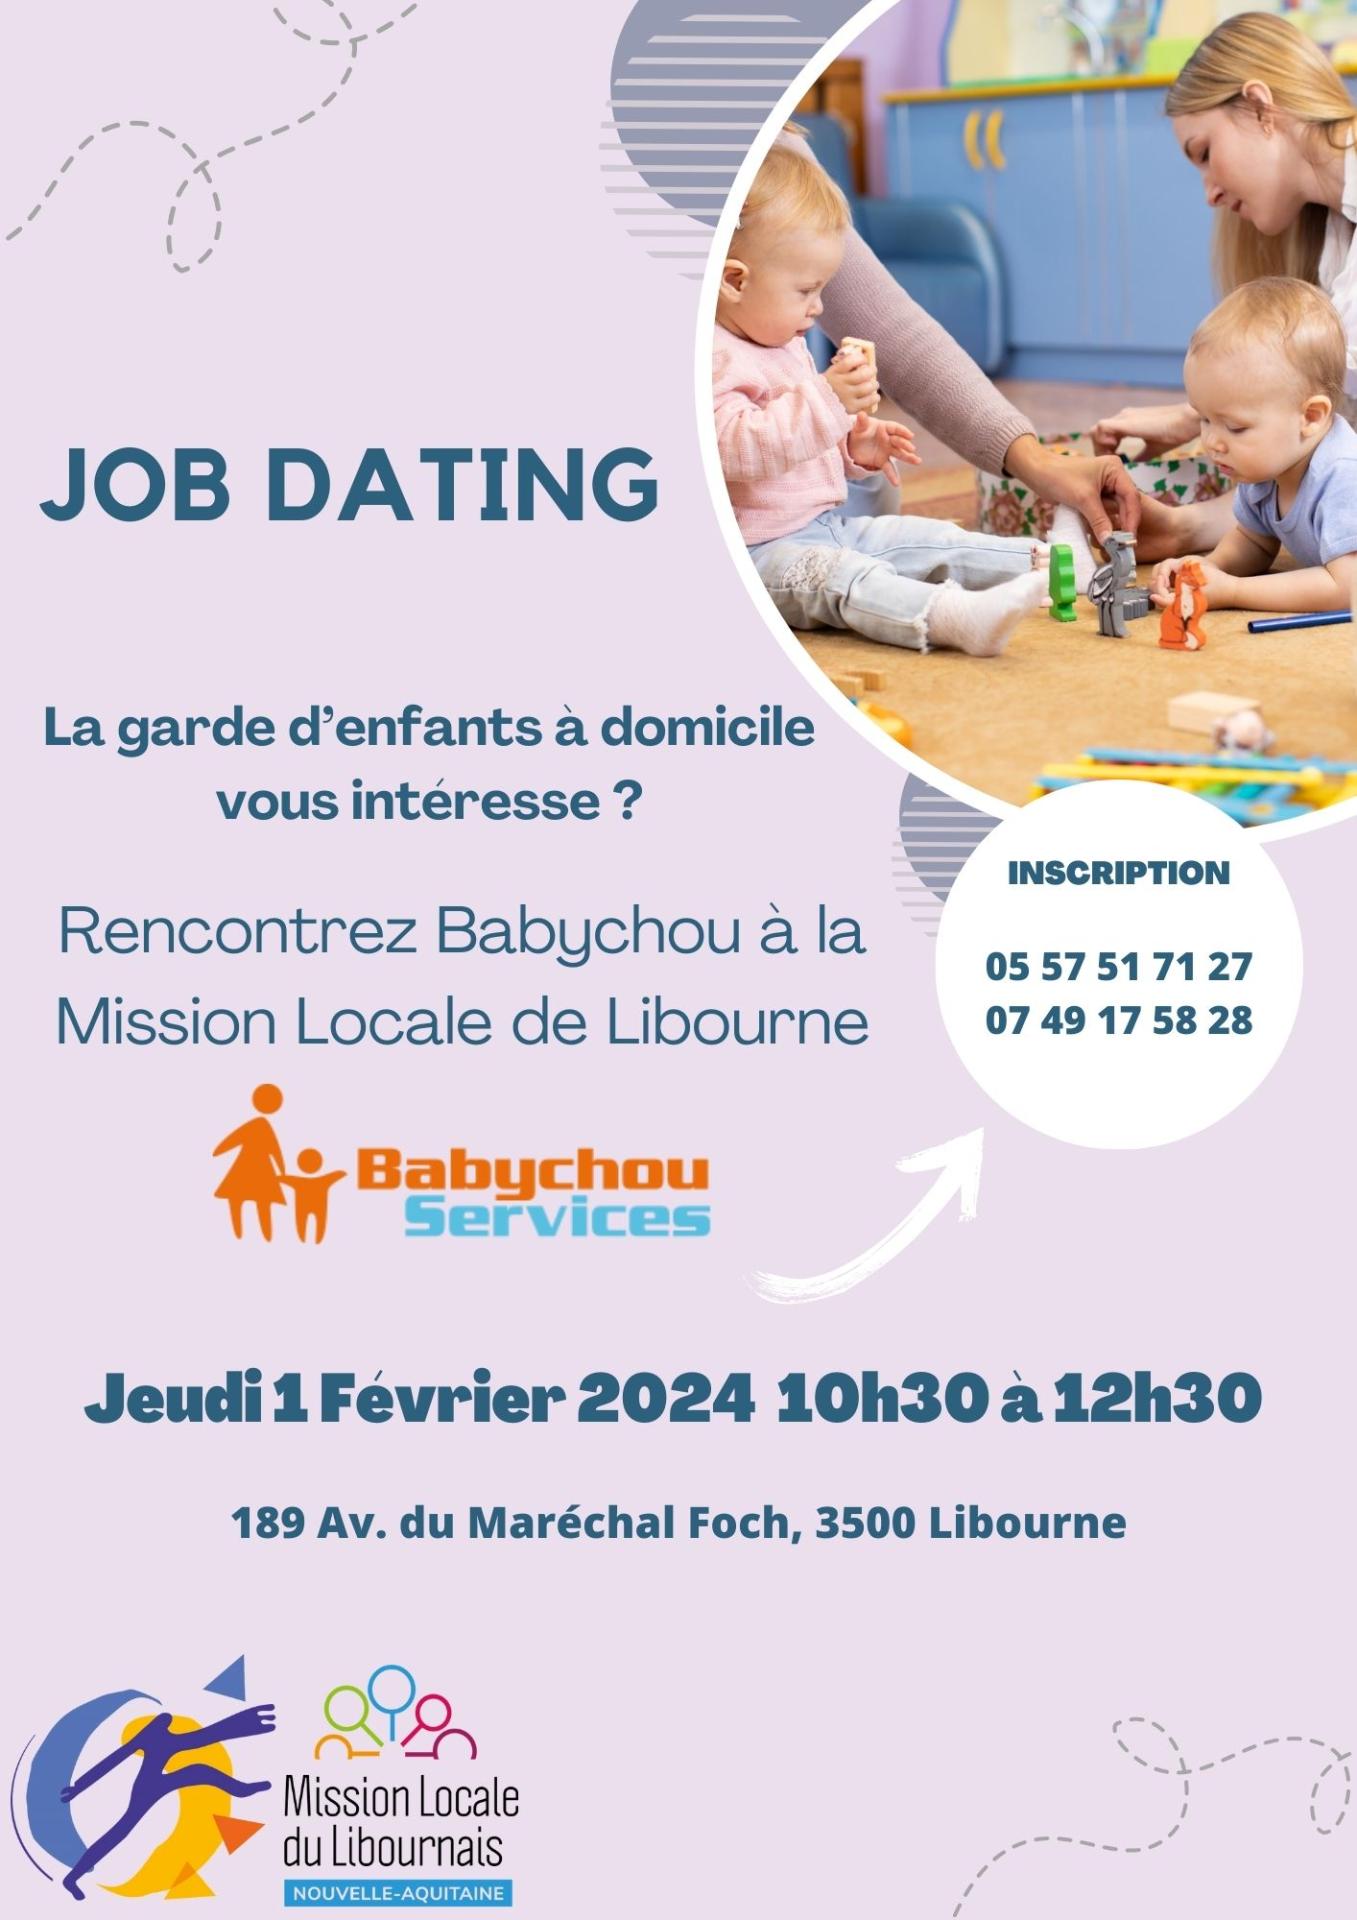 Job dating babychou 2024